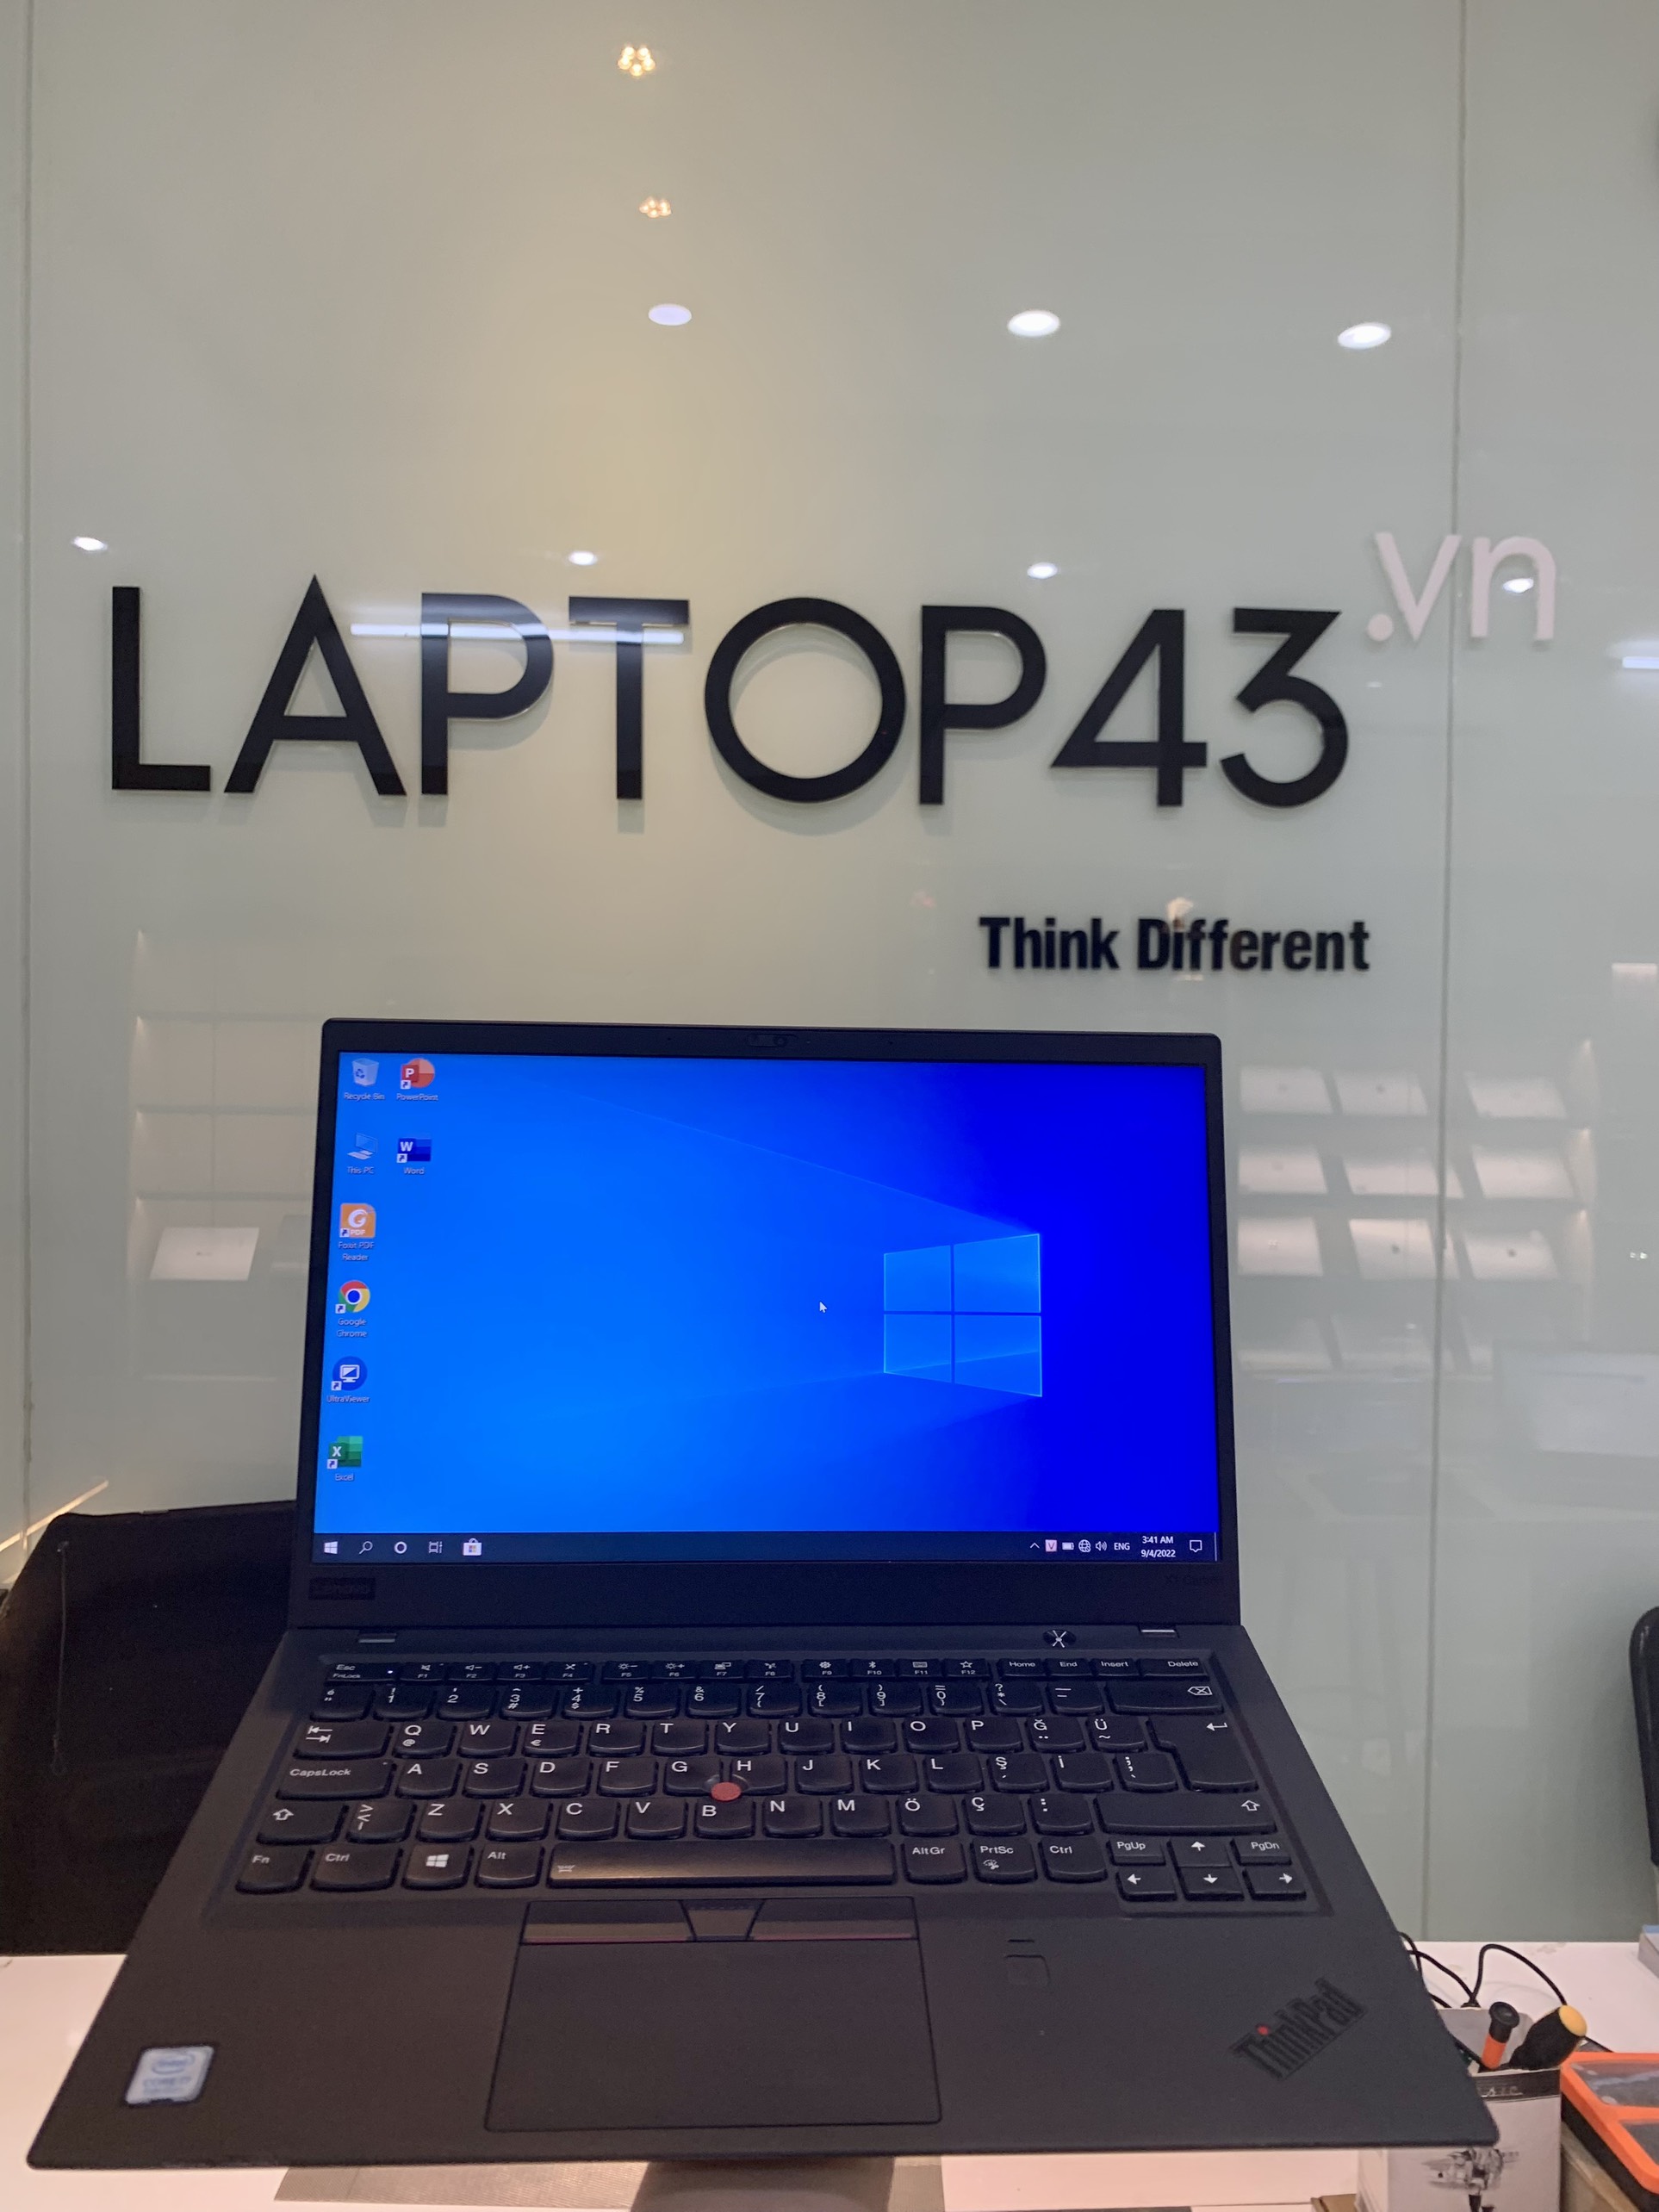 Lenovo ThinkPad X1 Carbon Gen 6 Core i7 8550U Ram 16G SSD 512G 14.0 FHD Full AC